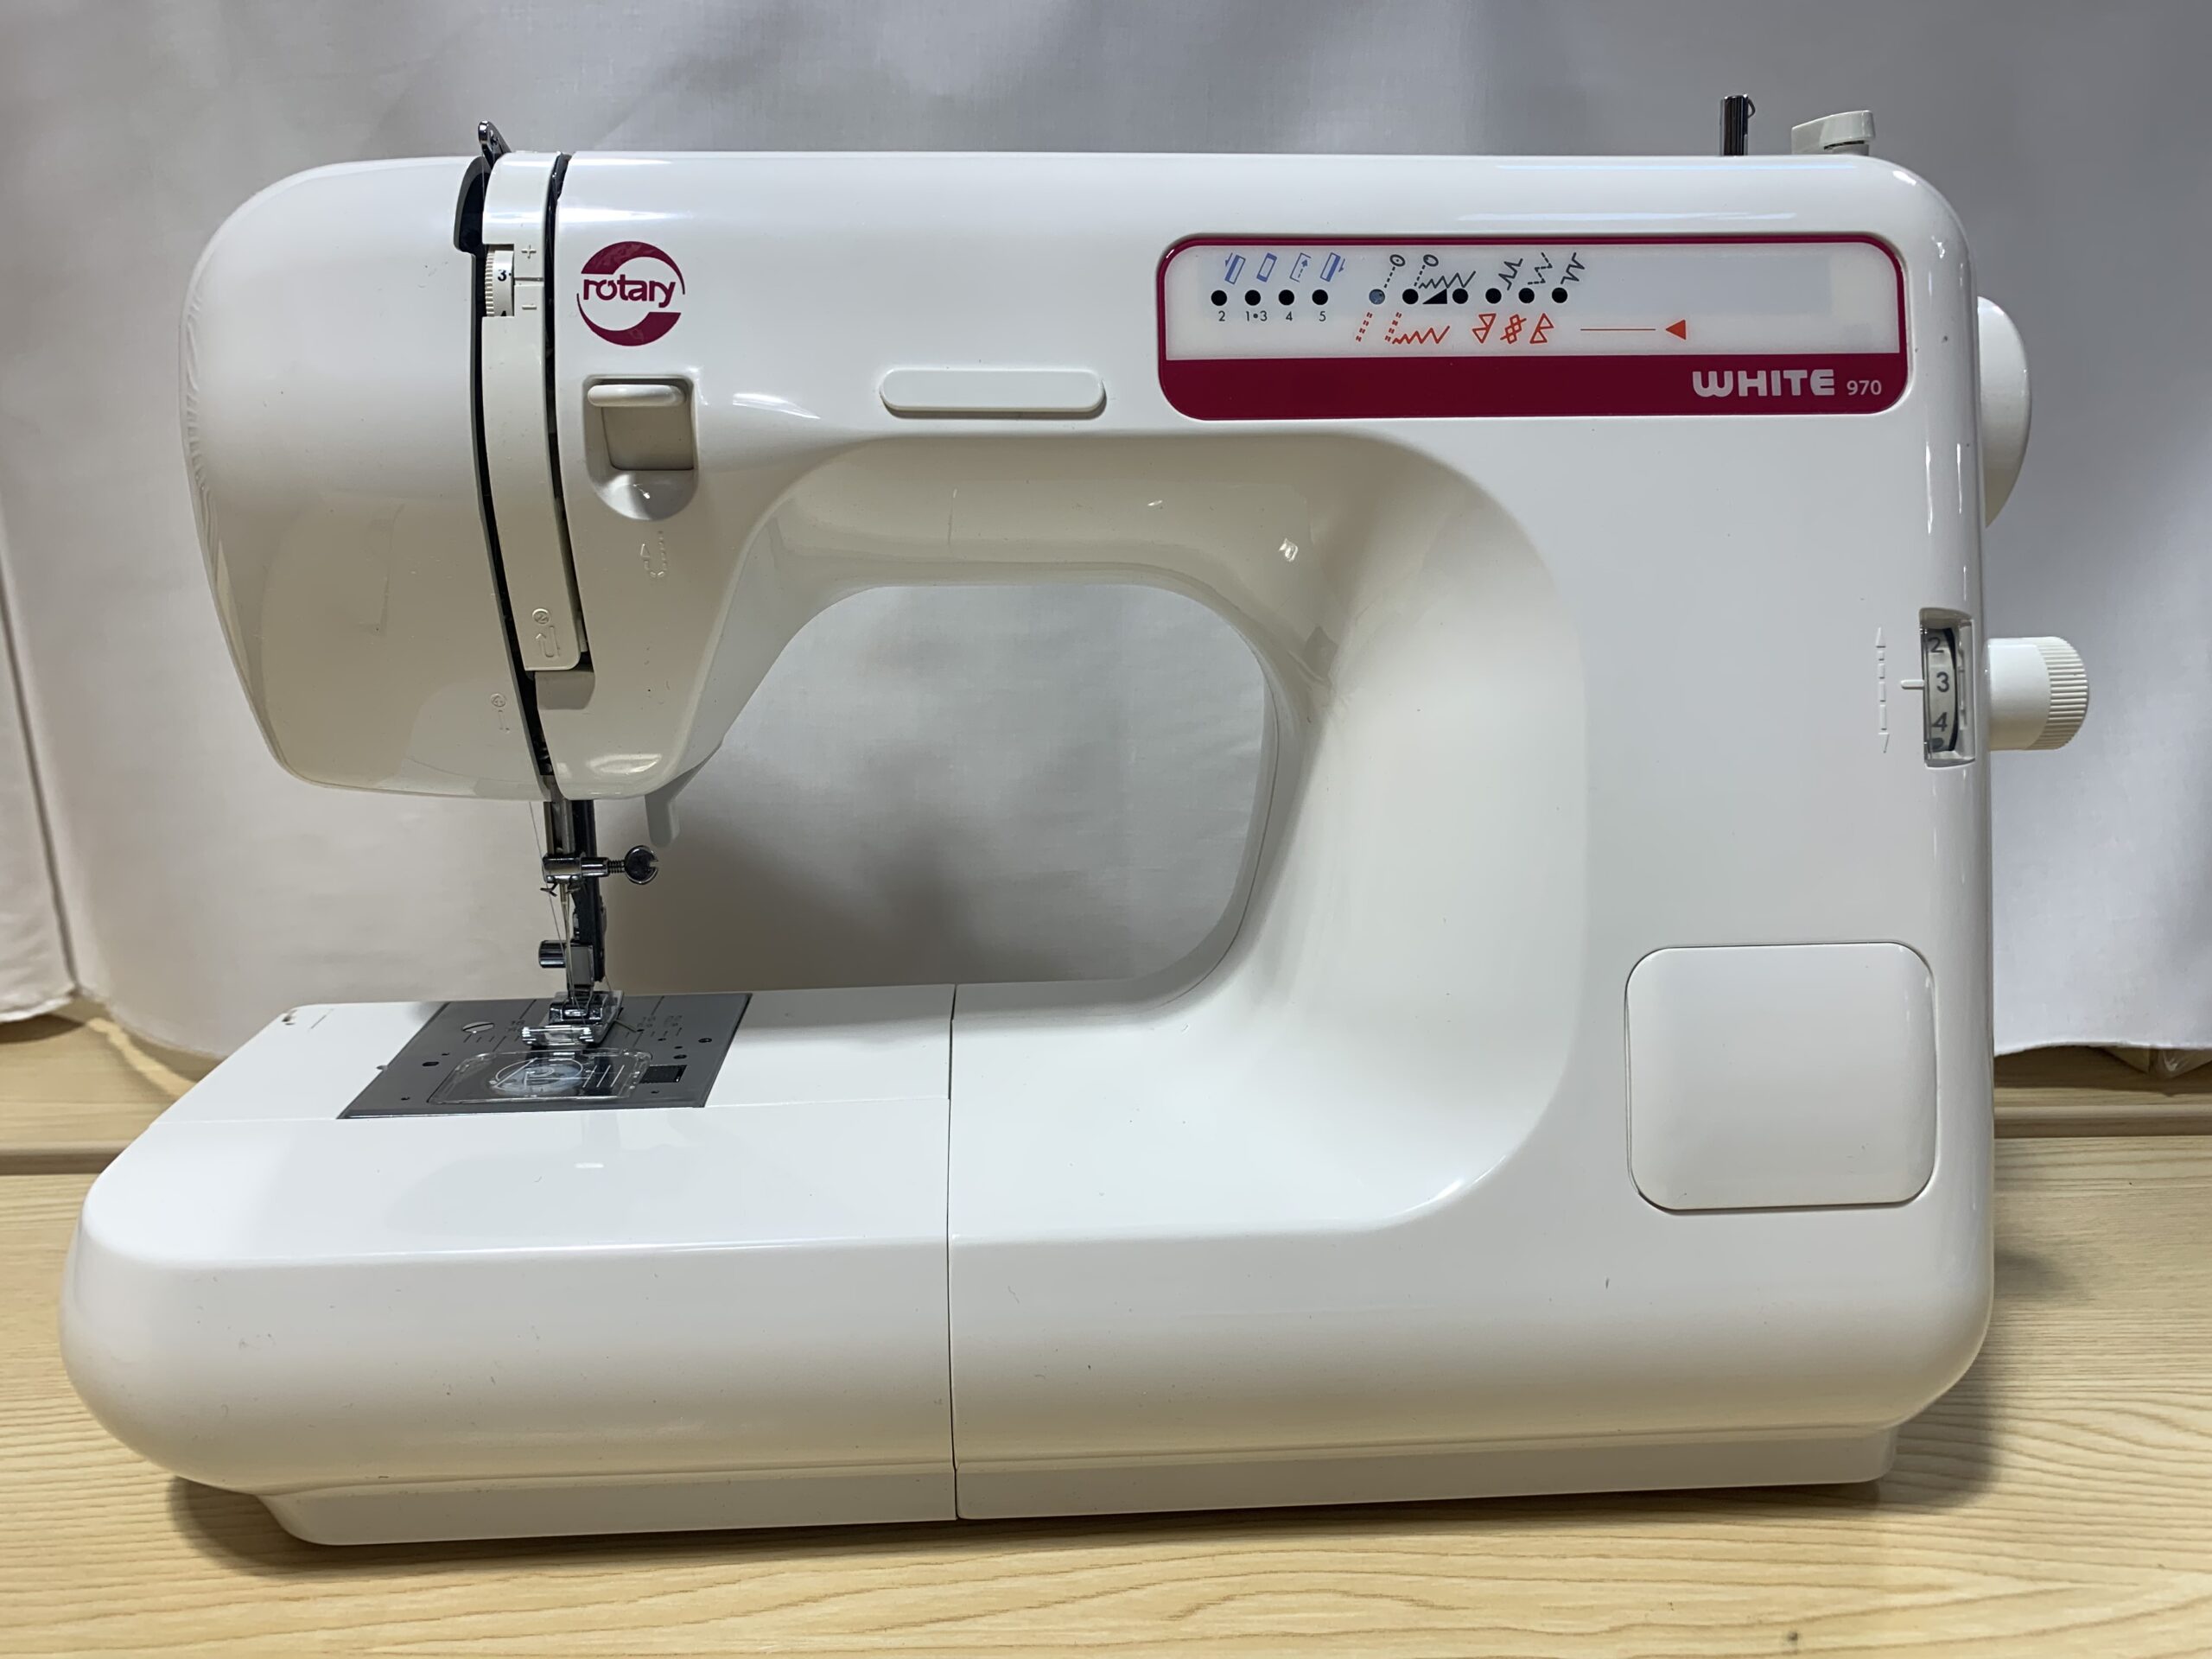 Roly Poly Workshop: Vintage White Brand Sewing Machine Teal Model # SZ-230